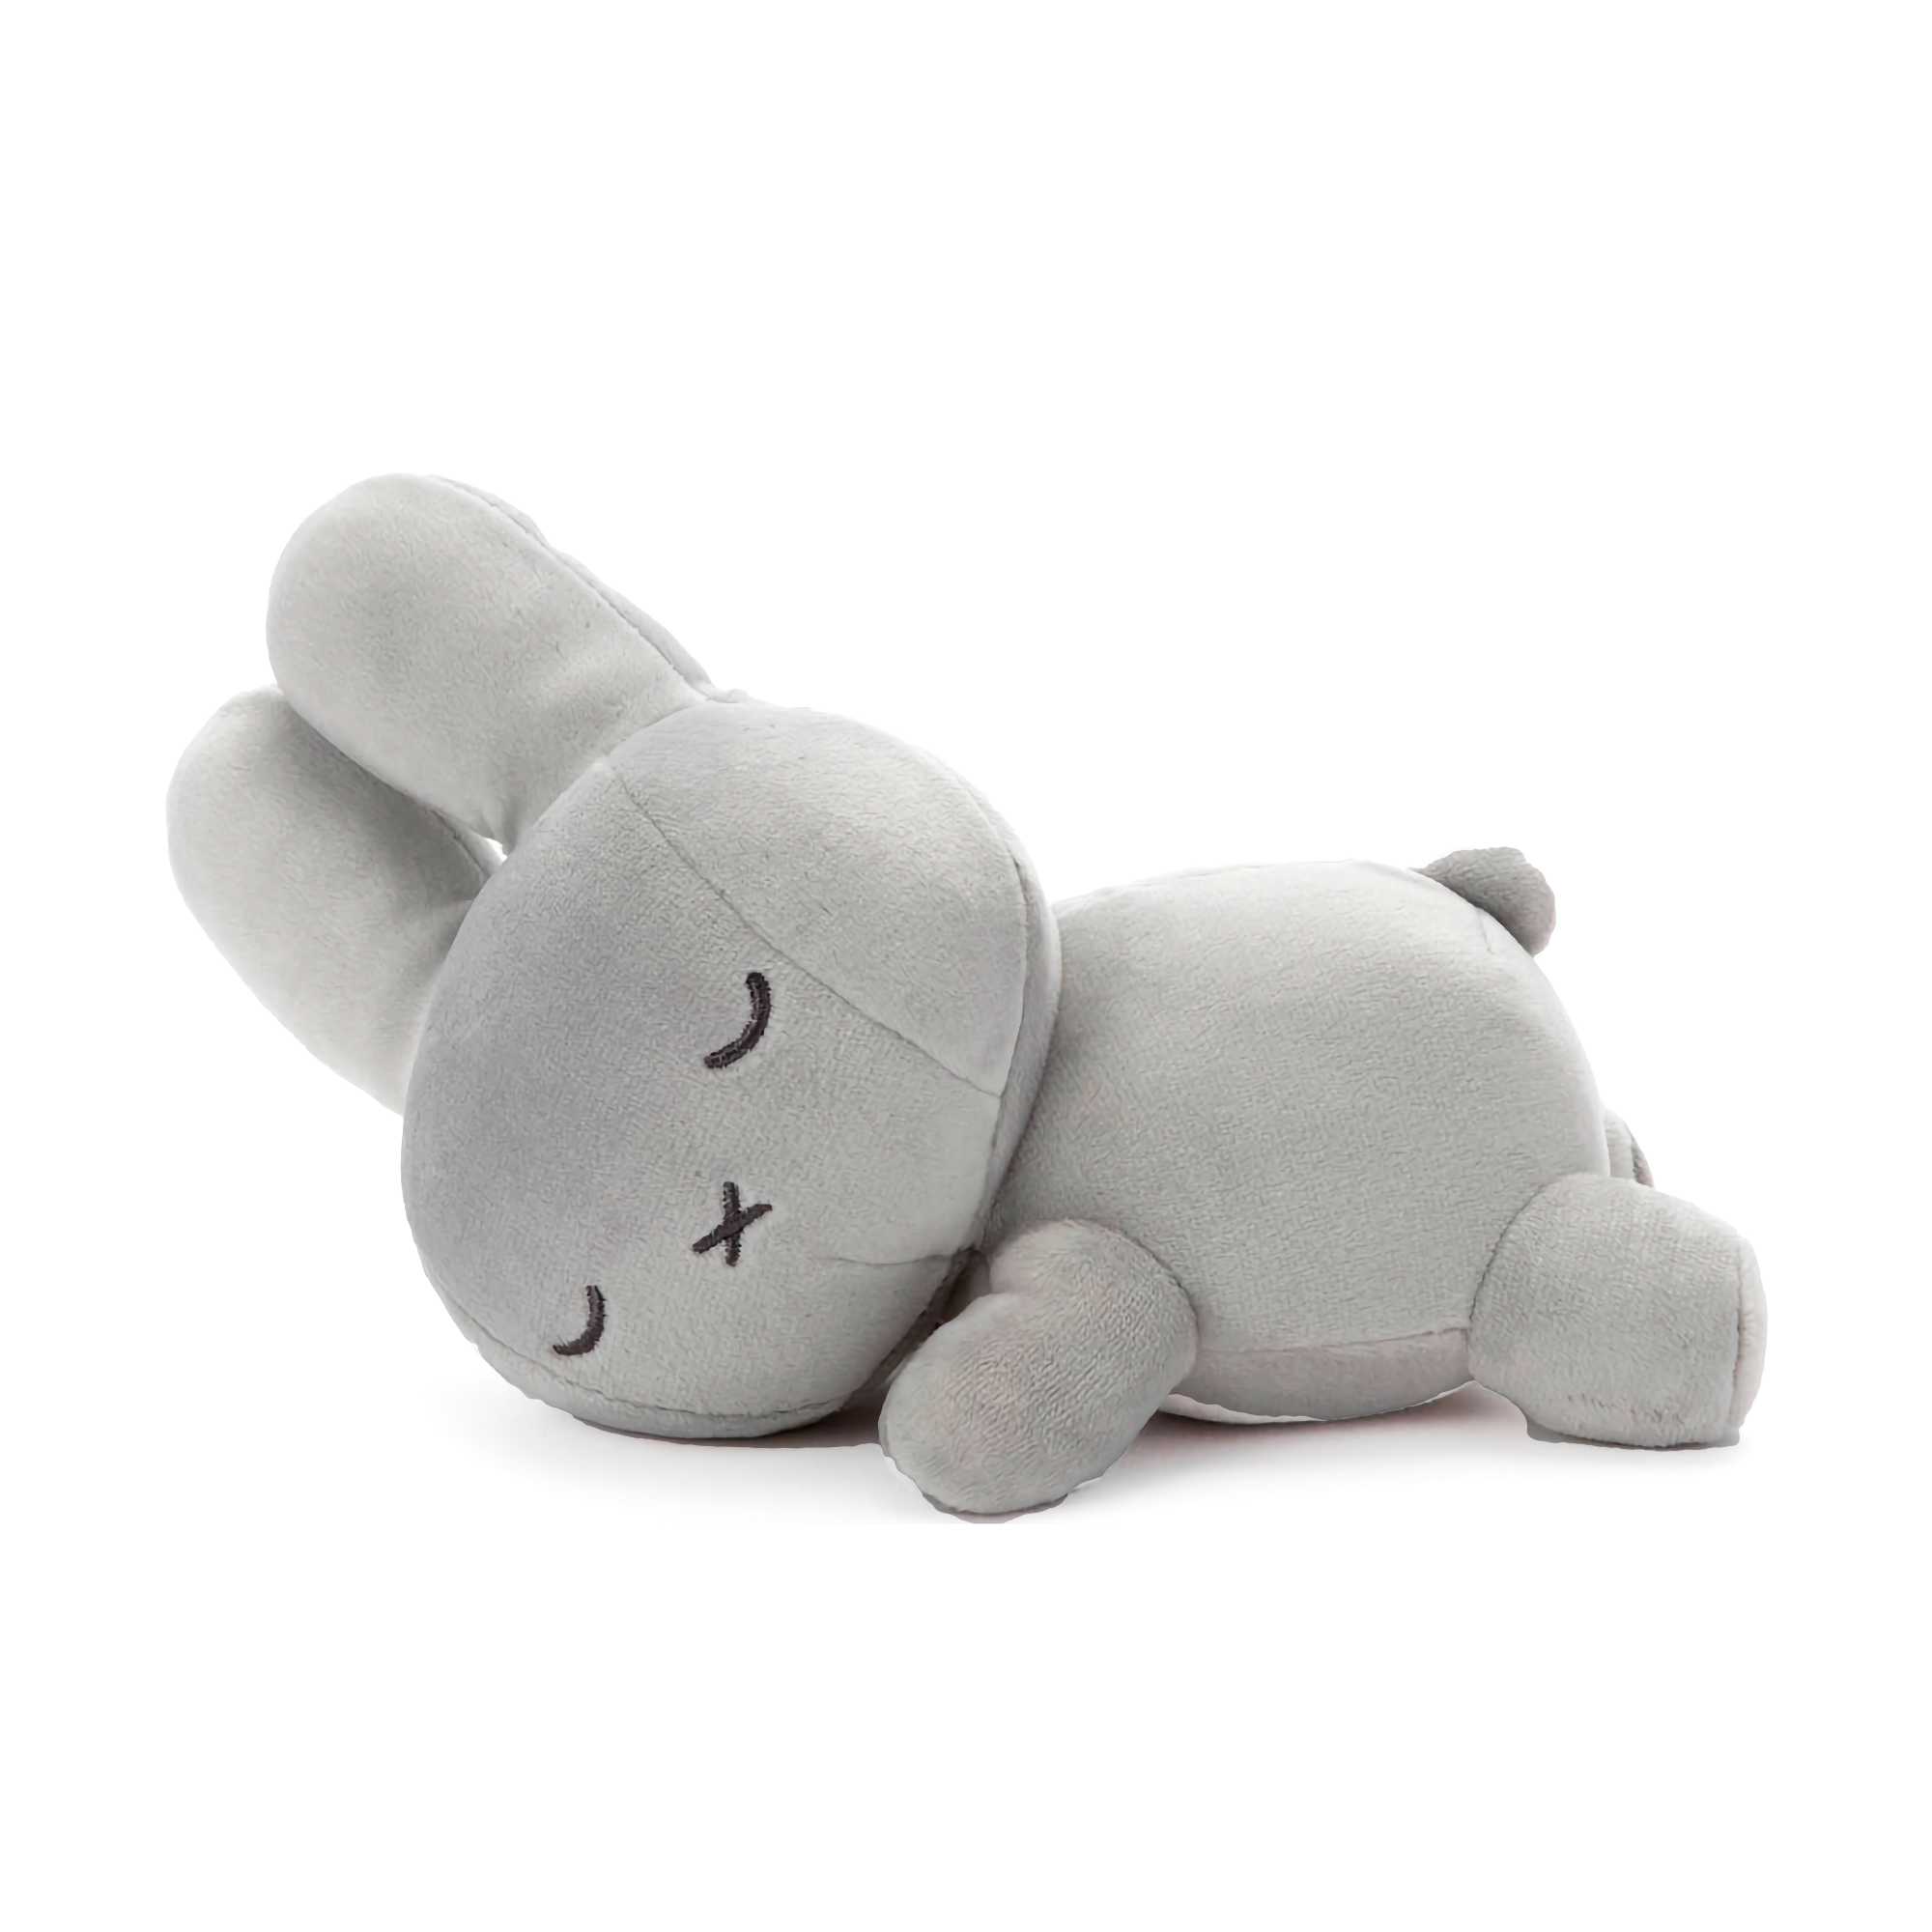 Miffy Sleeping Friend Plush Toy Small, Grey (19cm)